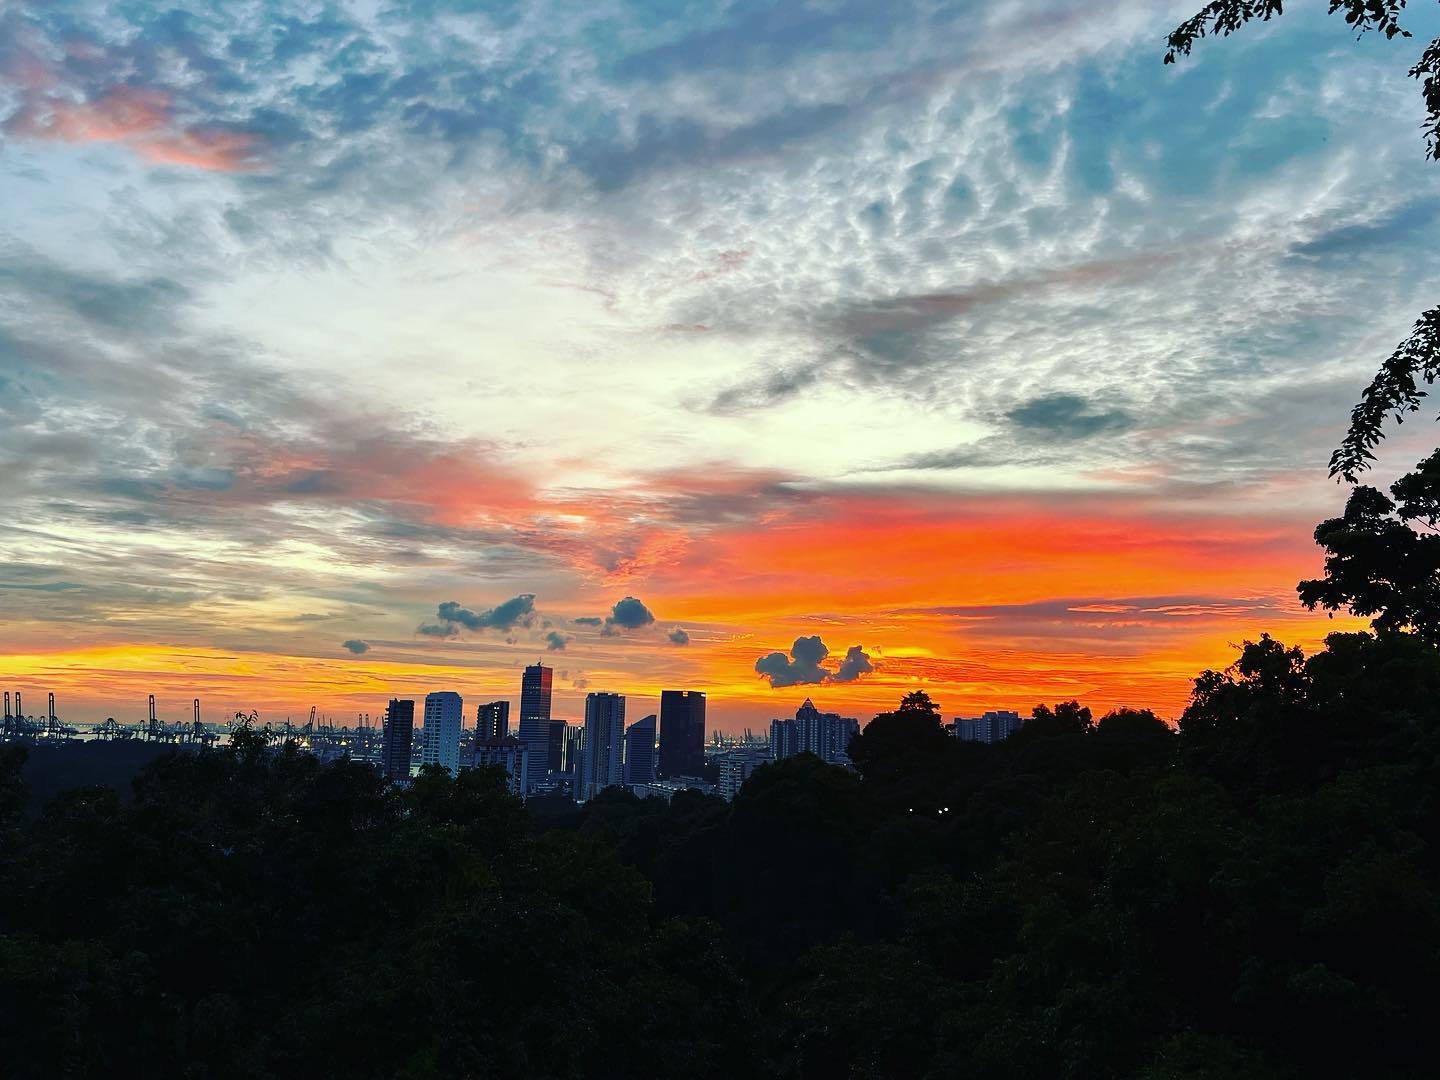 Sunrise & sunset spots in Singapore - Mount faber Peak sunset